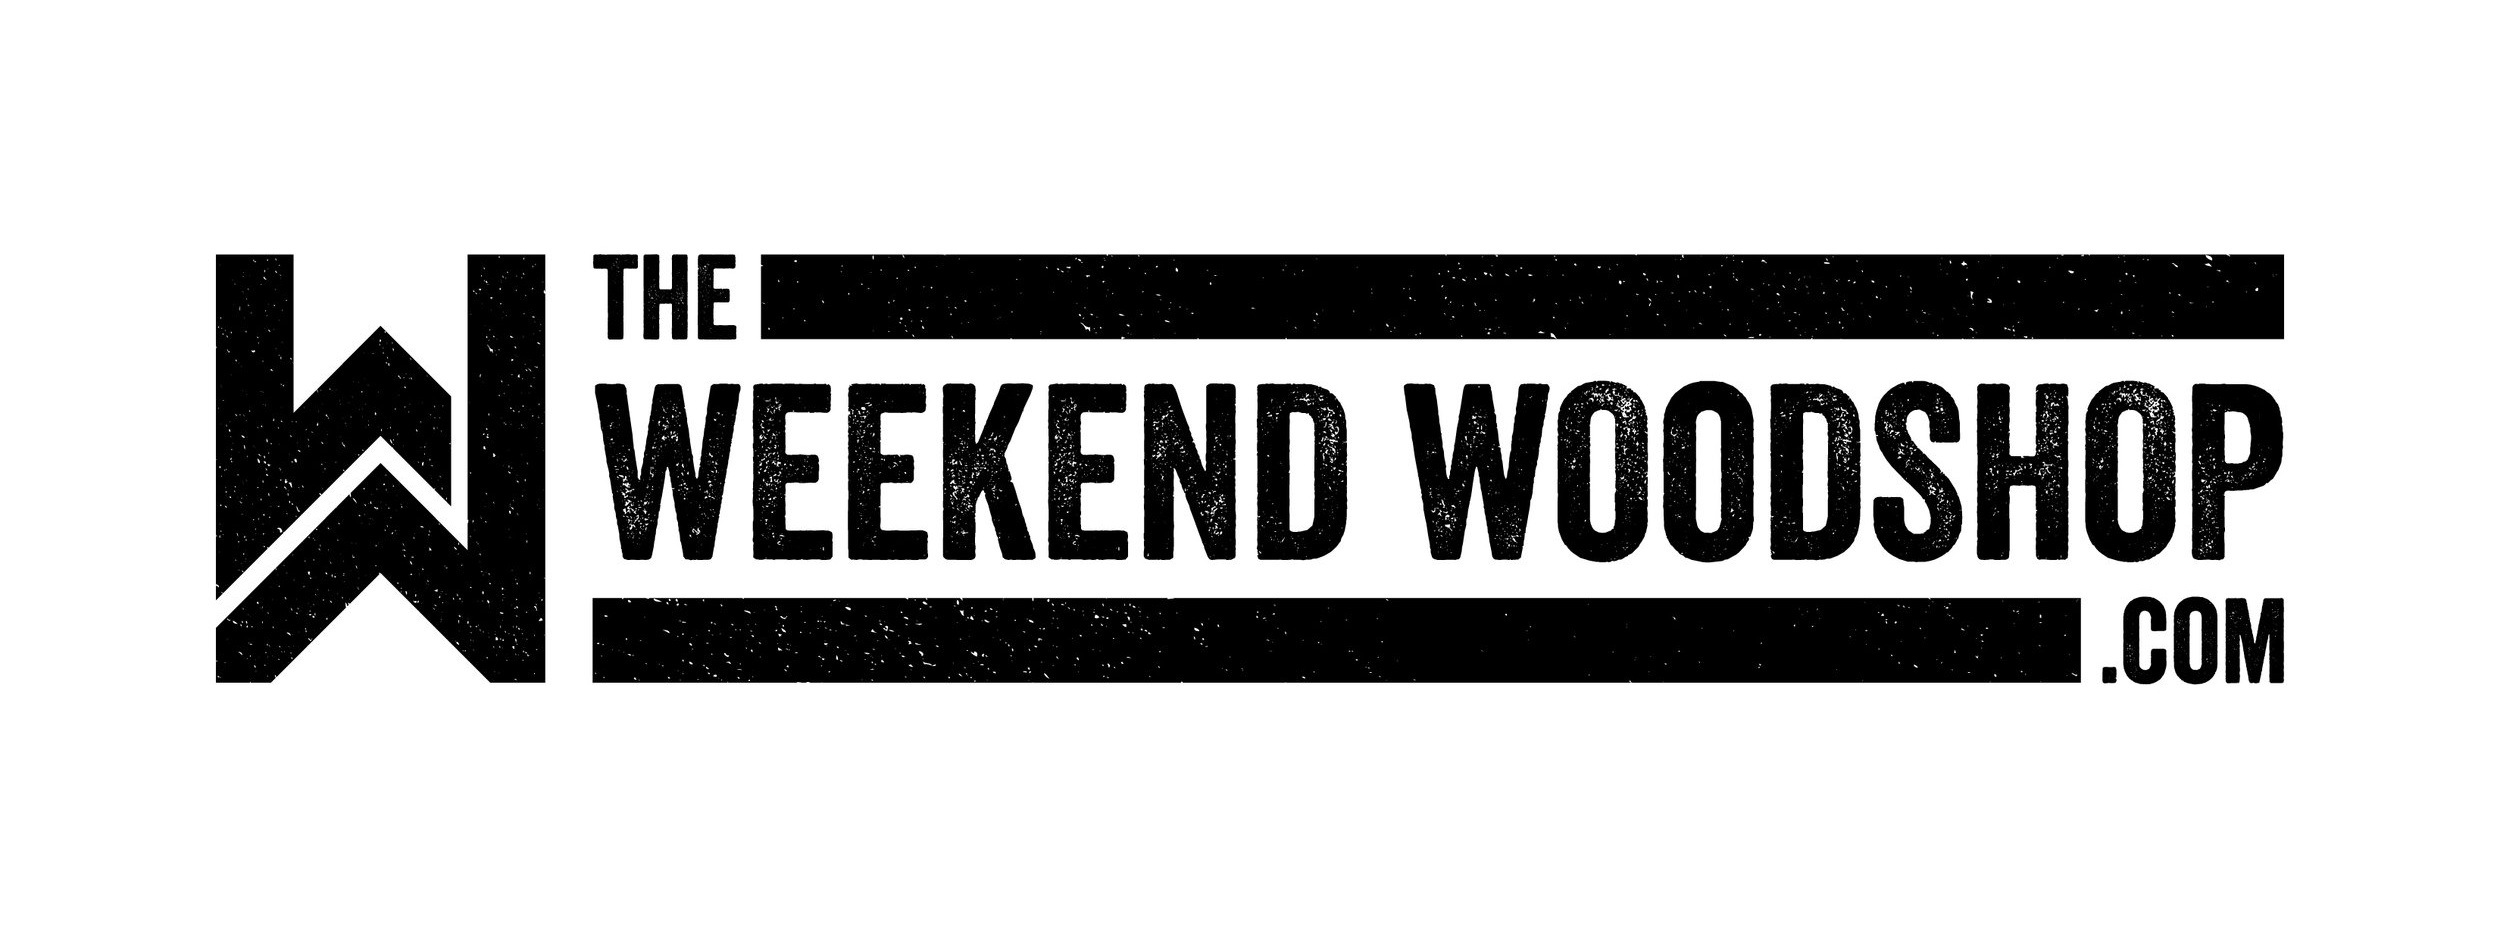 The Weekend Woodshop Logo - Full - square-01.jpg